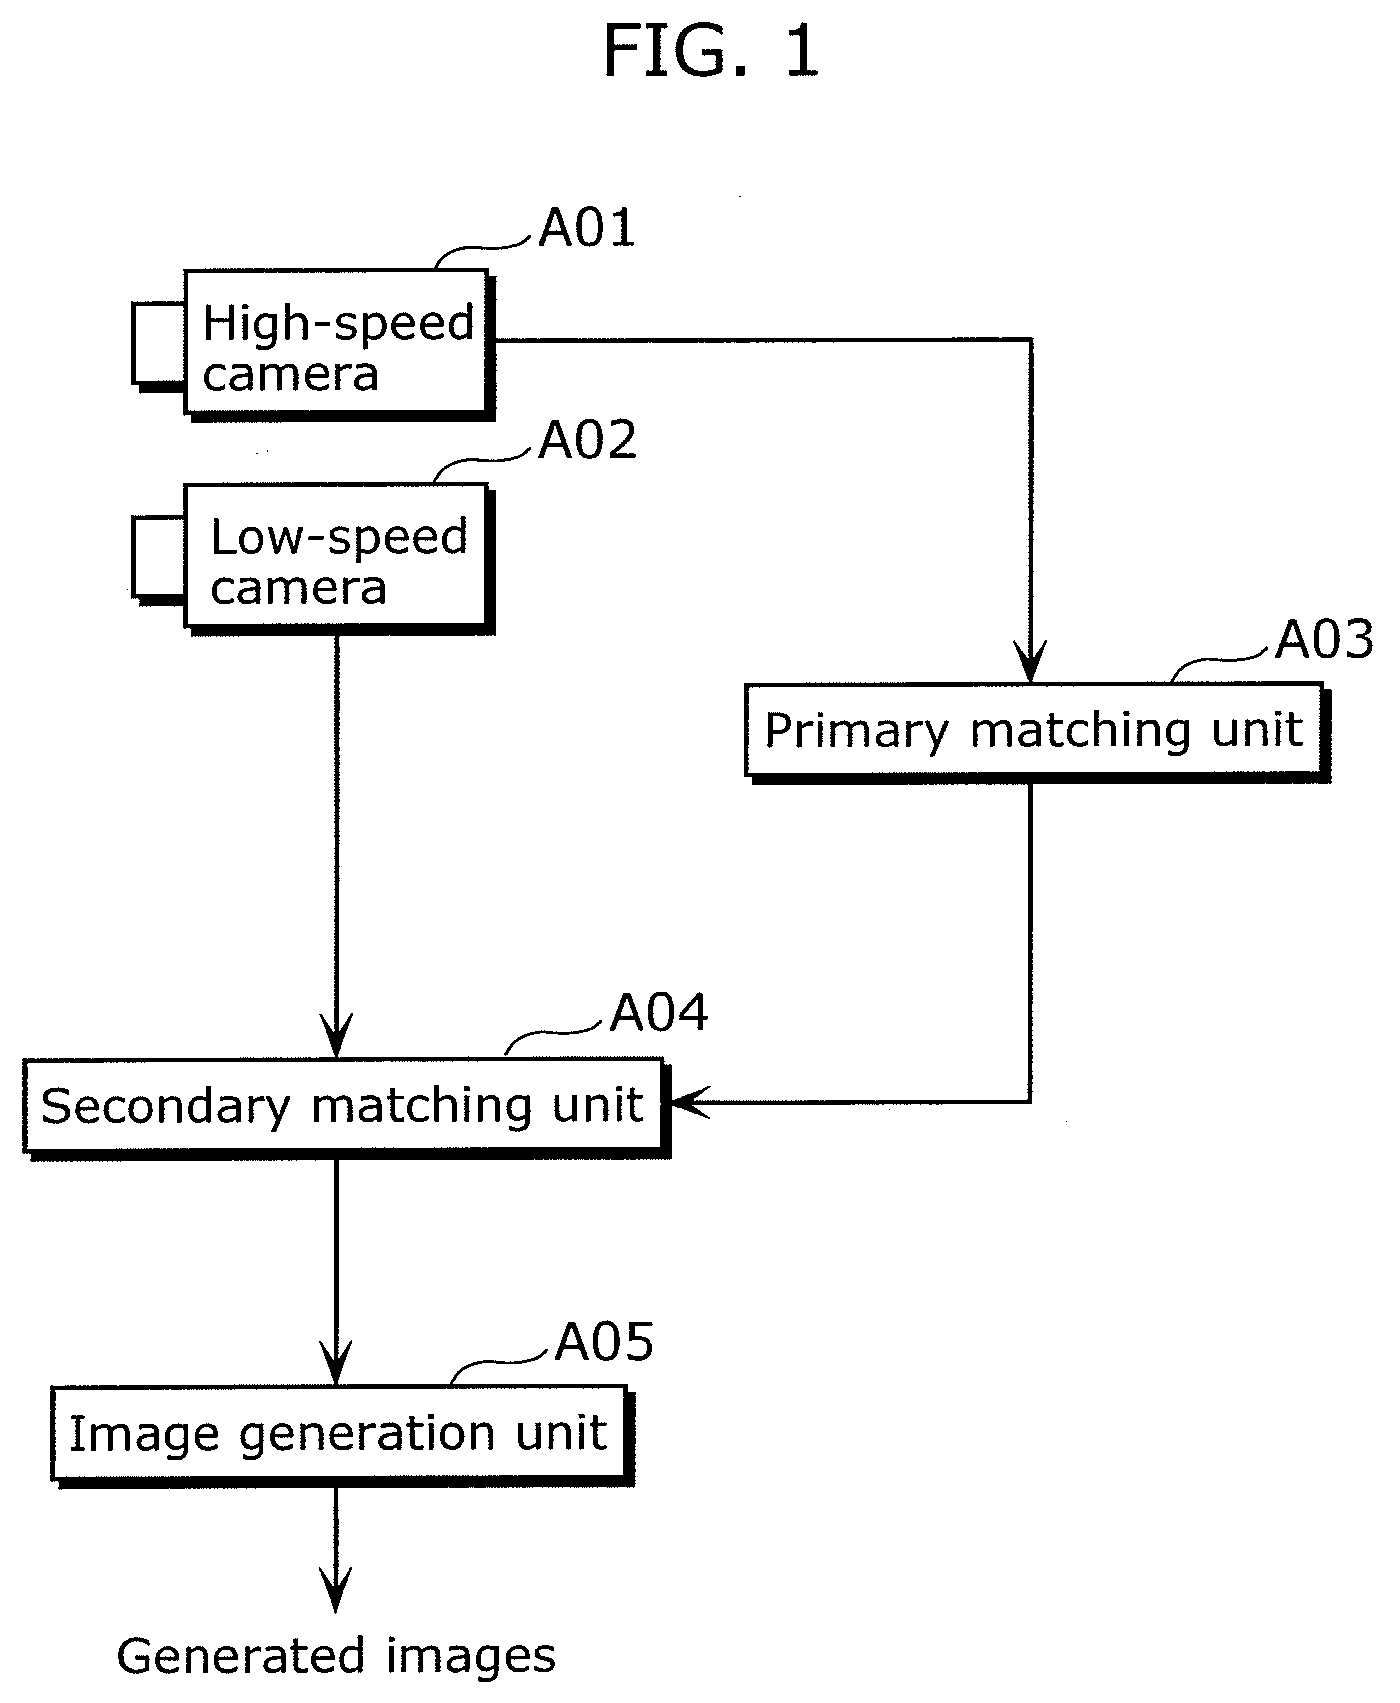 Image generation apparatus and image generation method